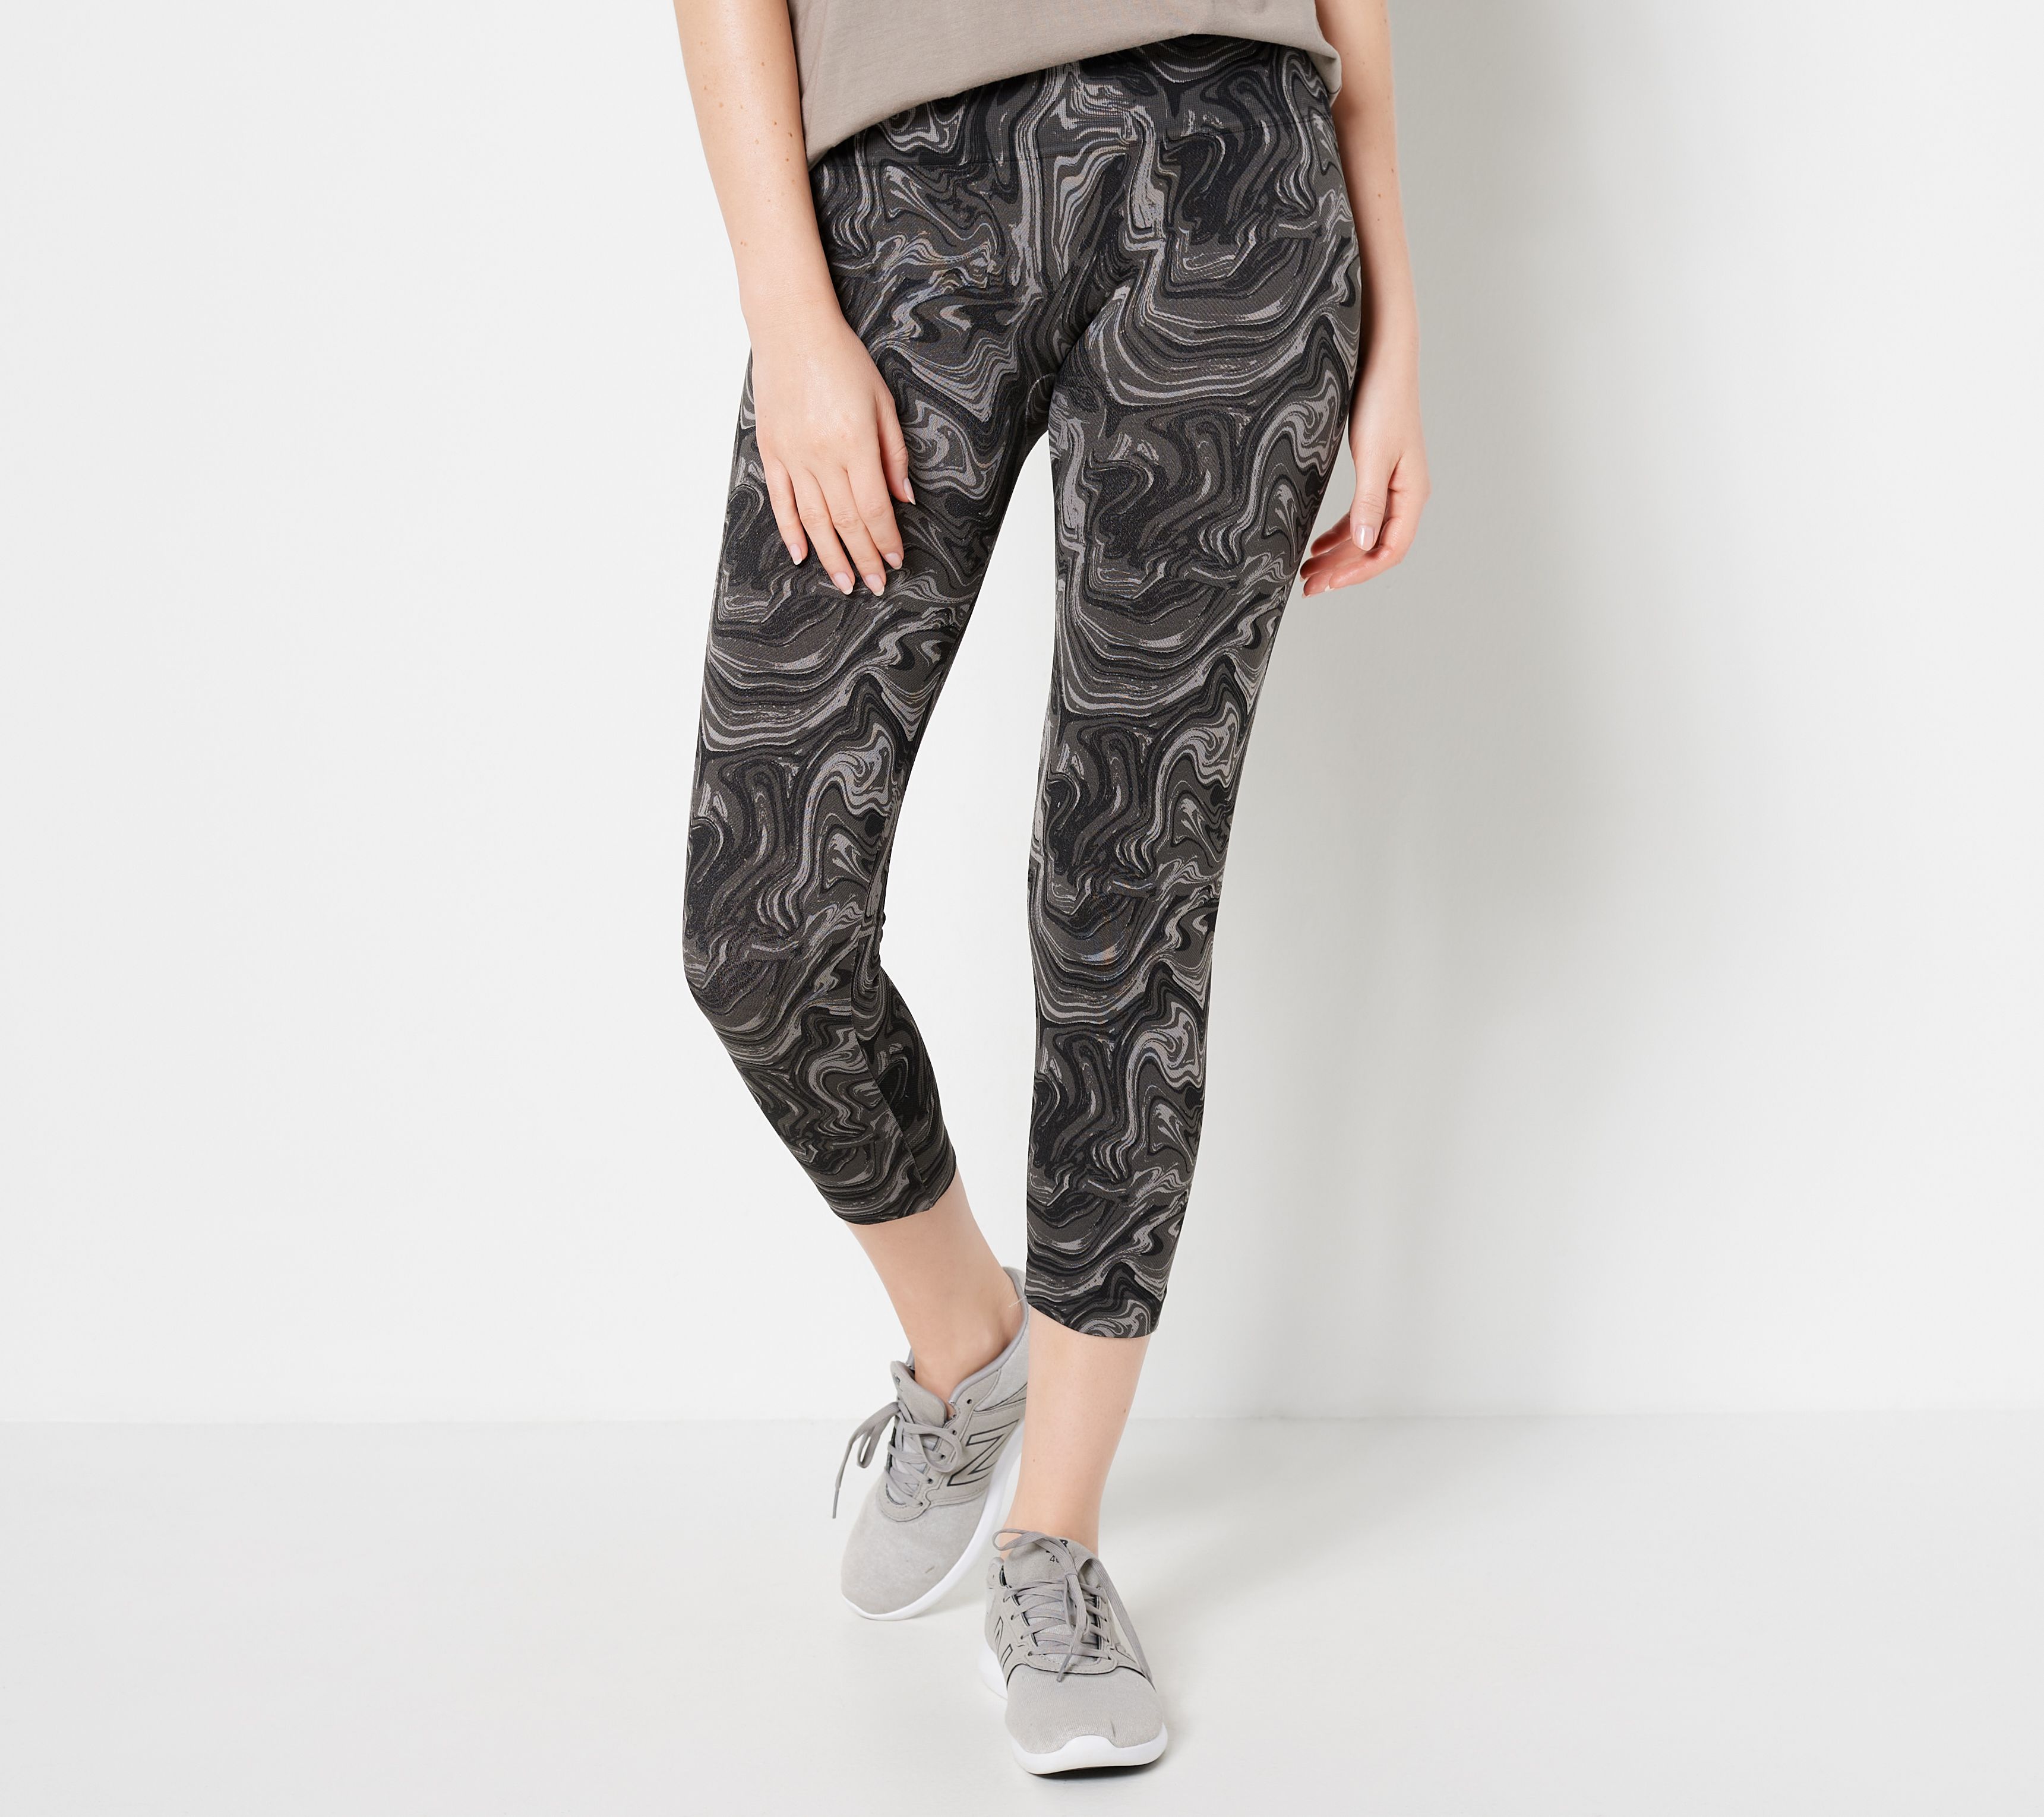 Lululemon Black Swirl Print Cropped Athletic Leggings - Size 6